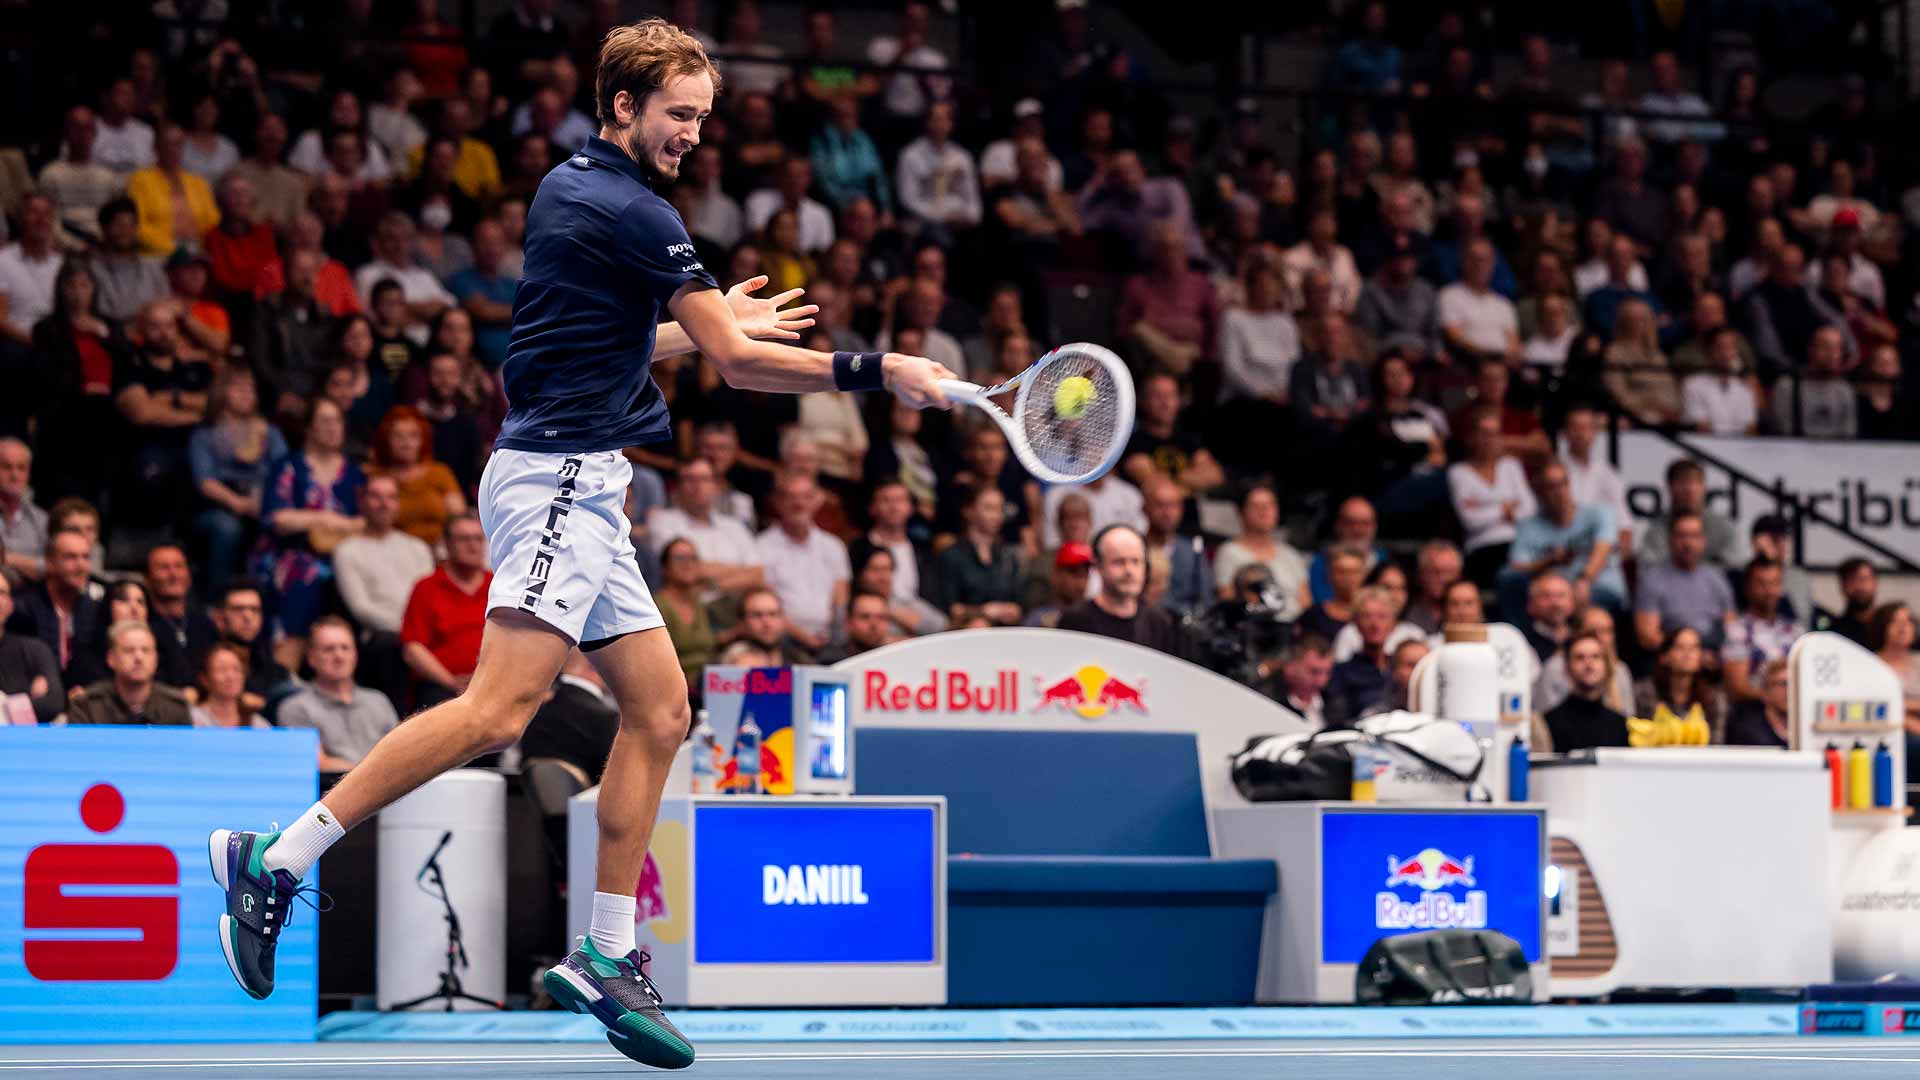 Vienna Open Final: Medvedev vs. Sinner - A Battle of Skill and Will